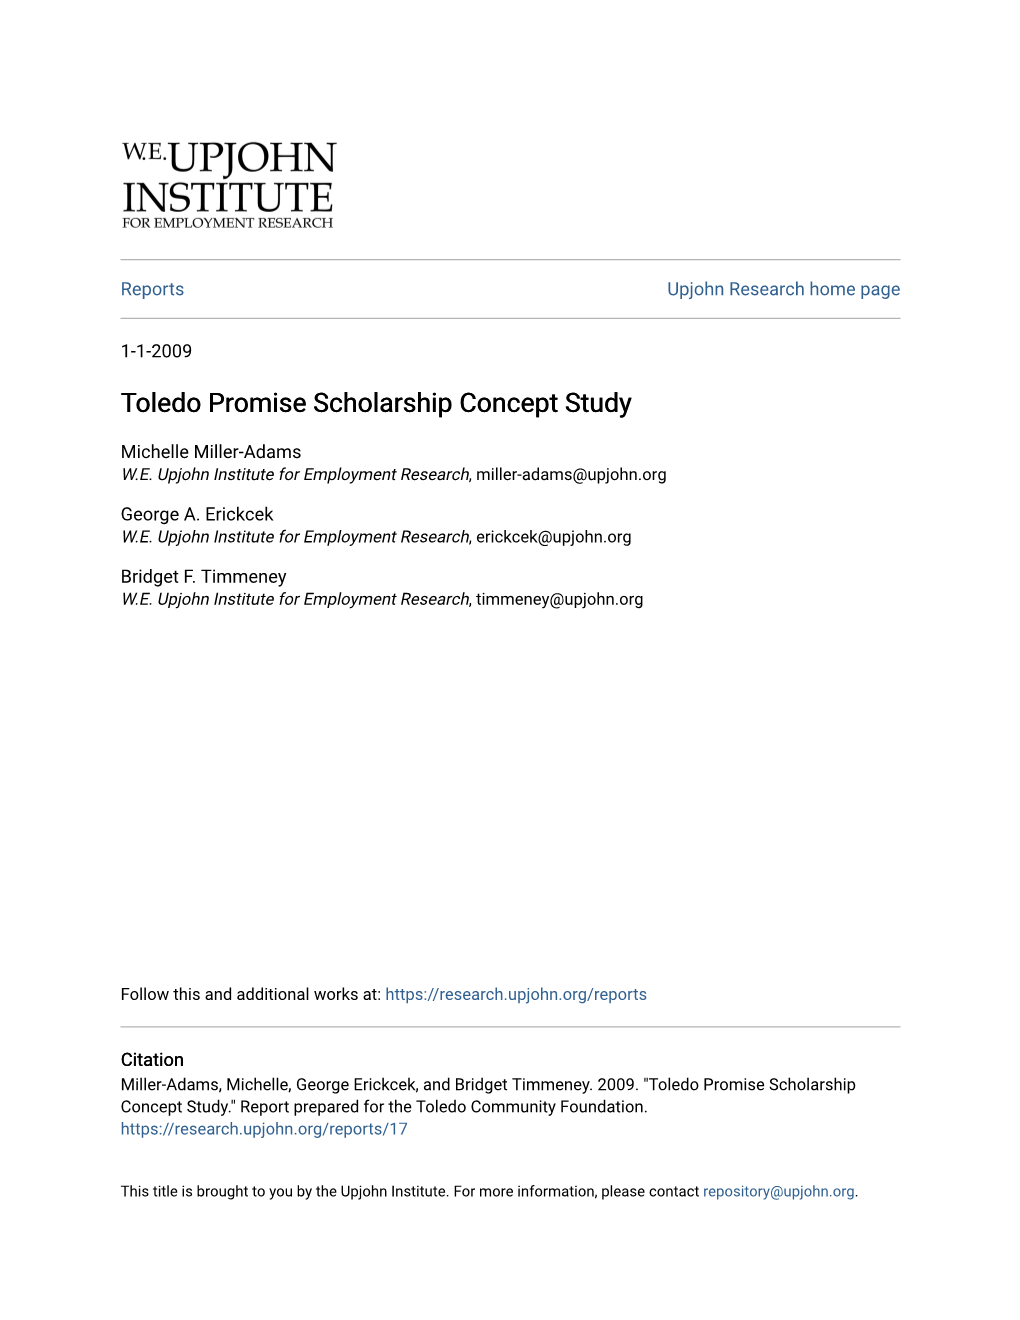 Toledo Promise Scholarship Concept Study